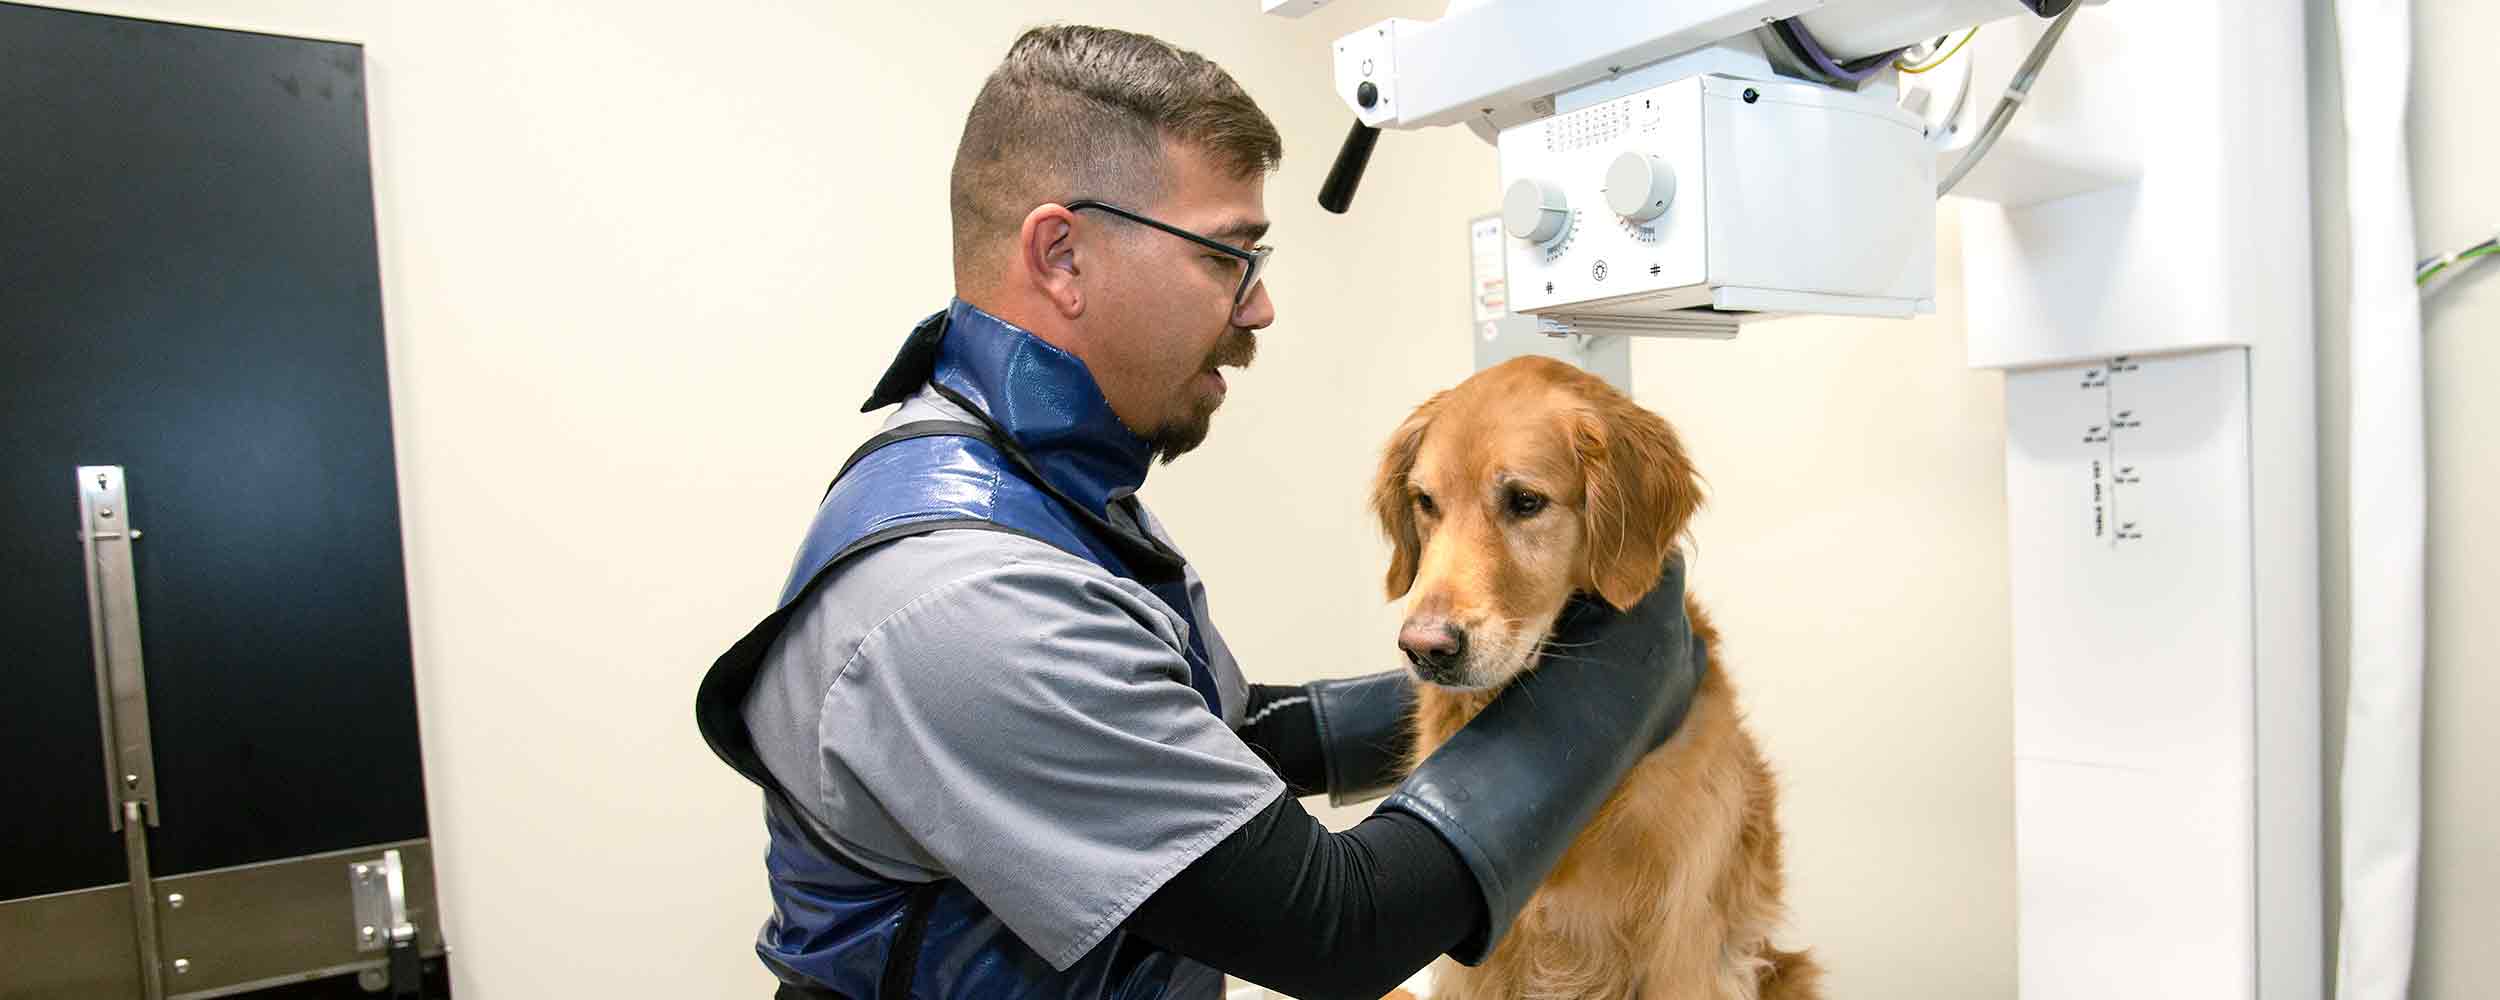 Veterinary Technician